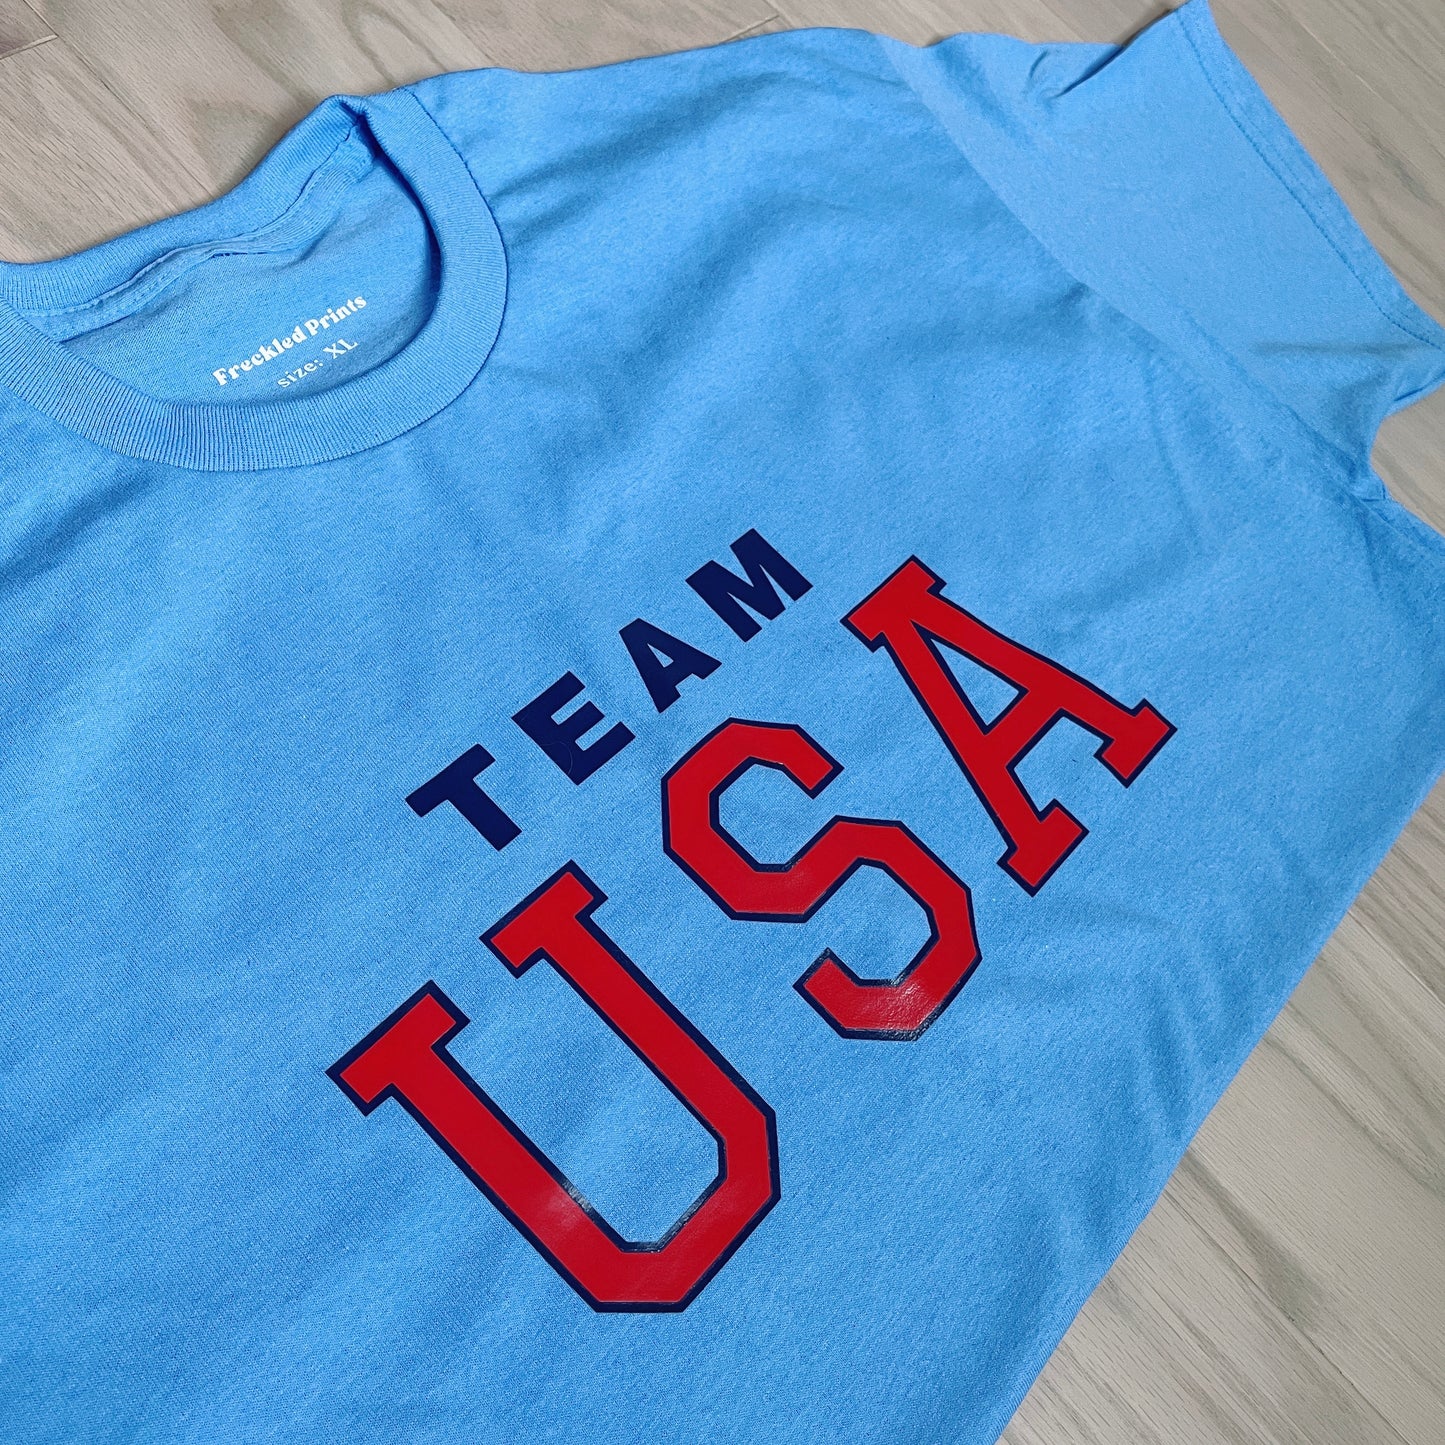 Team USA Tee